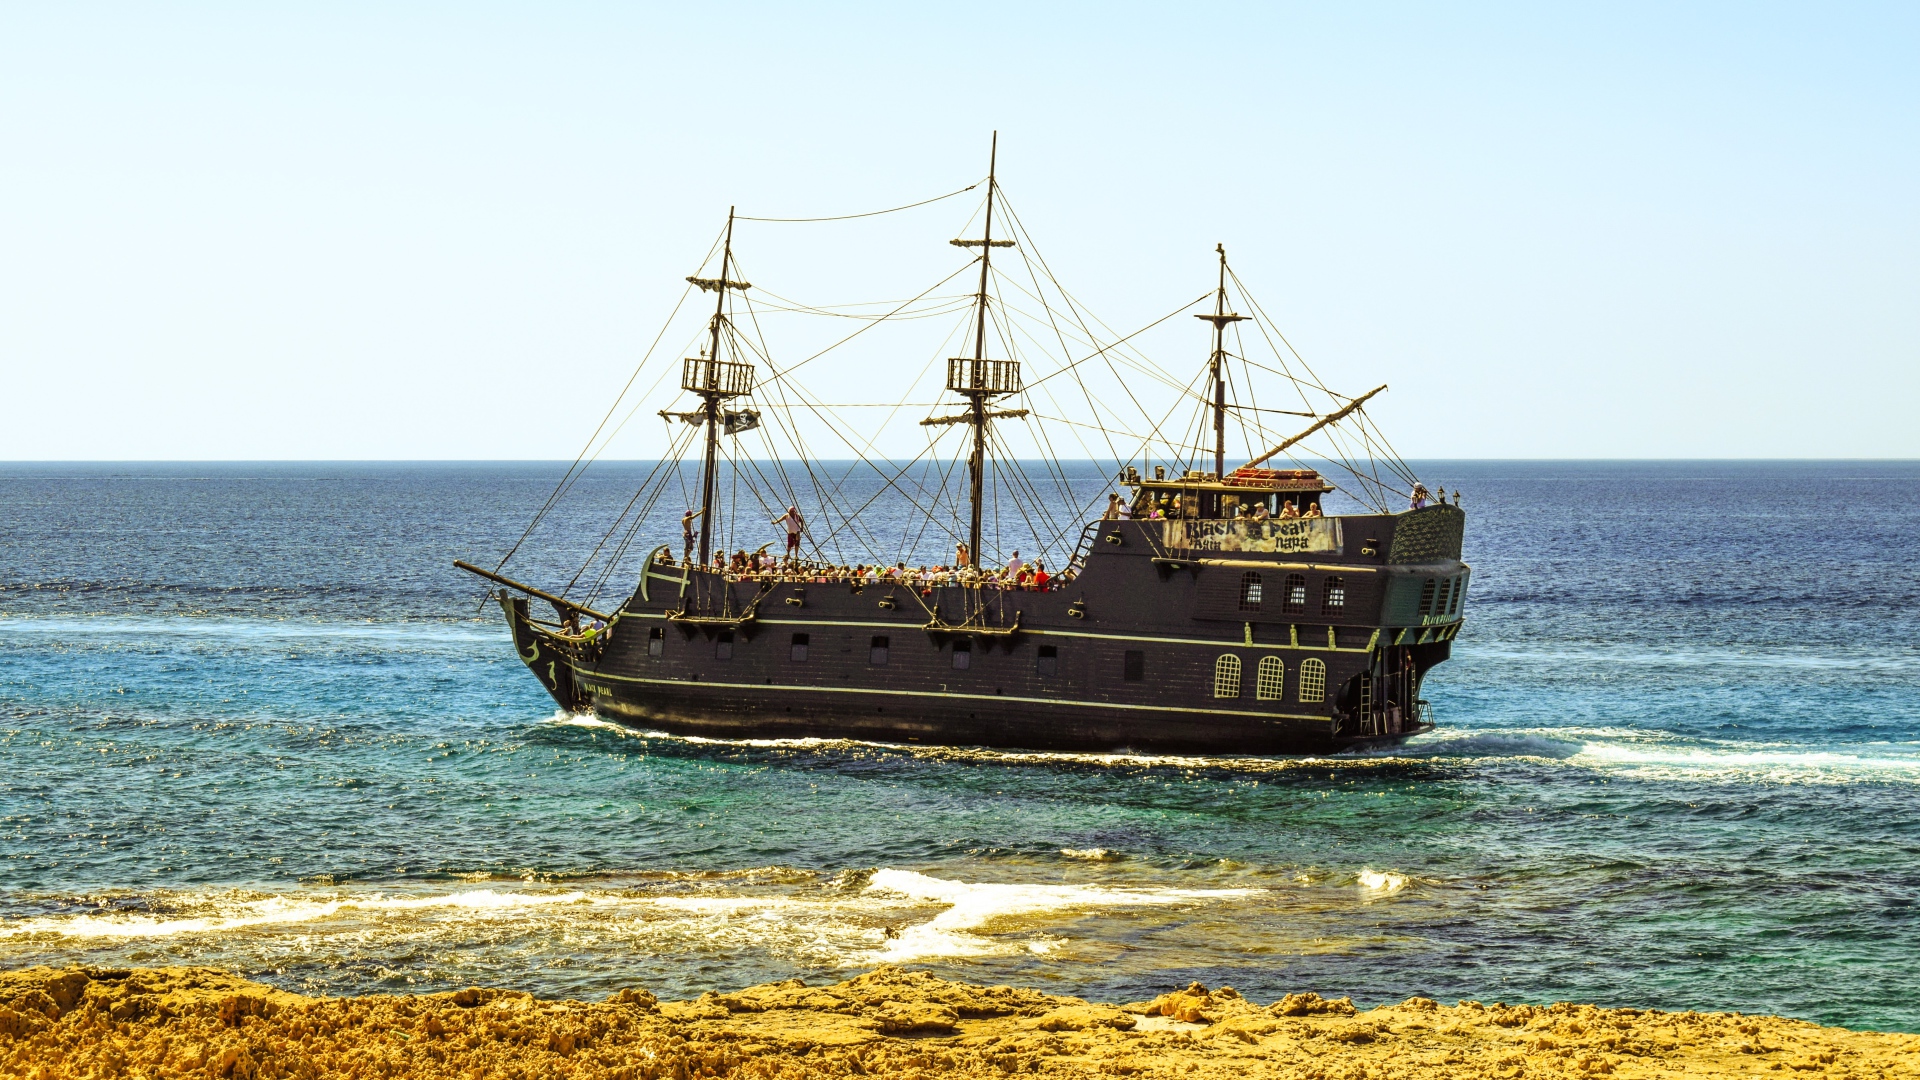 Big black pirate ship off the coast